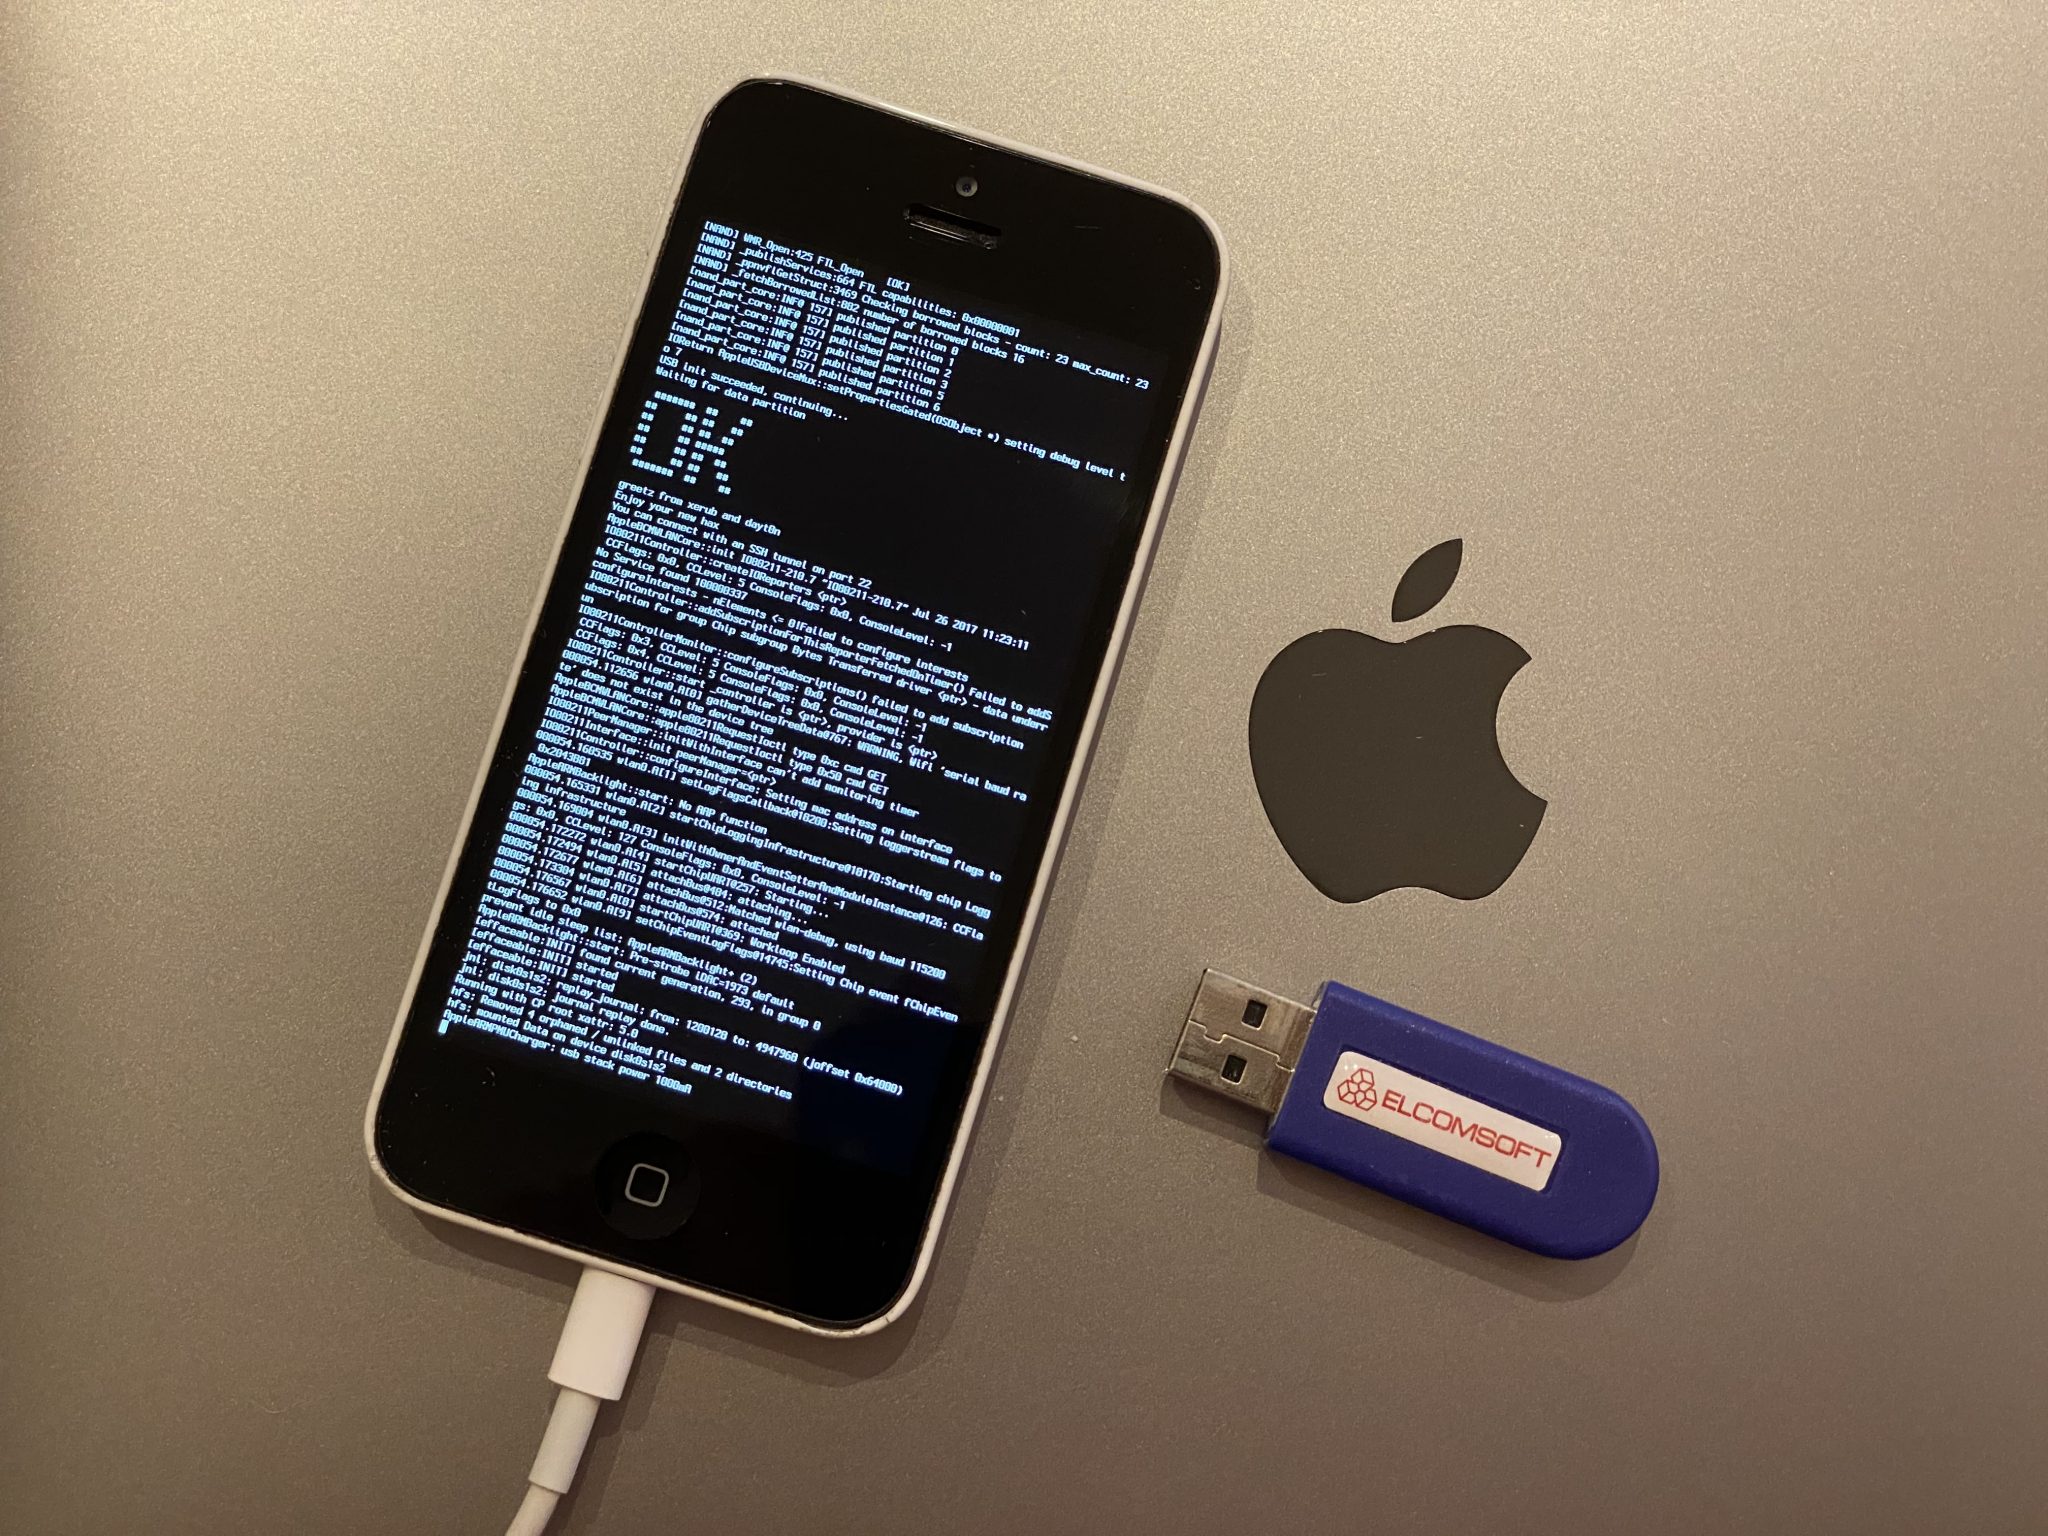 iphone unlock toolkit exe